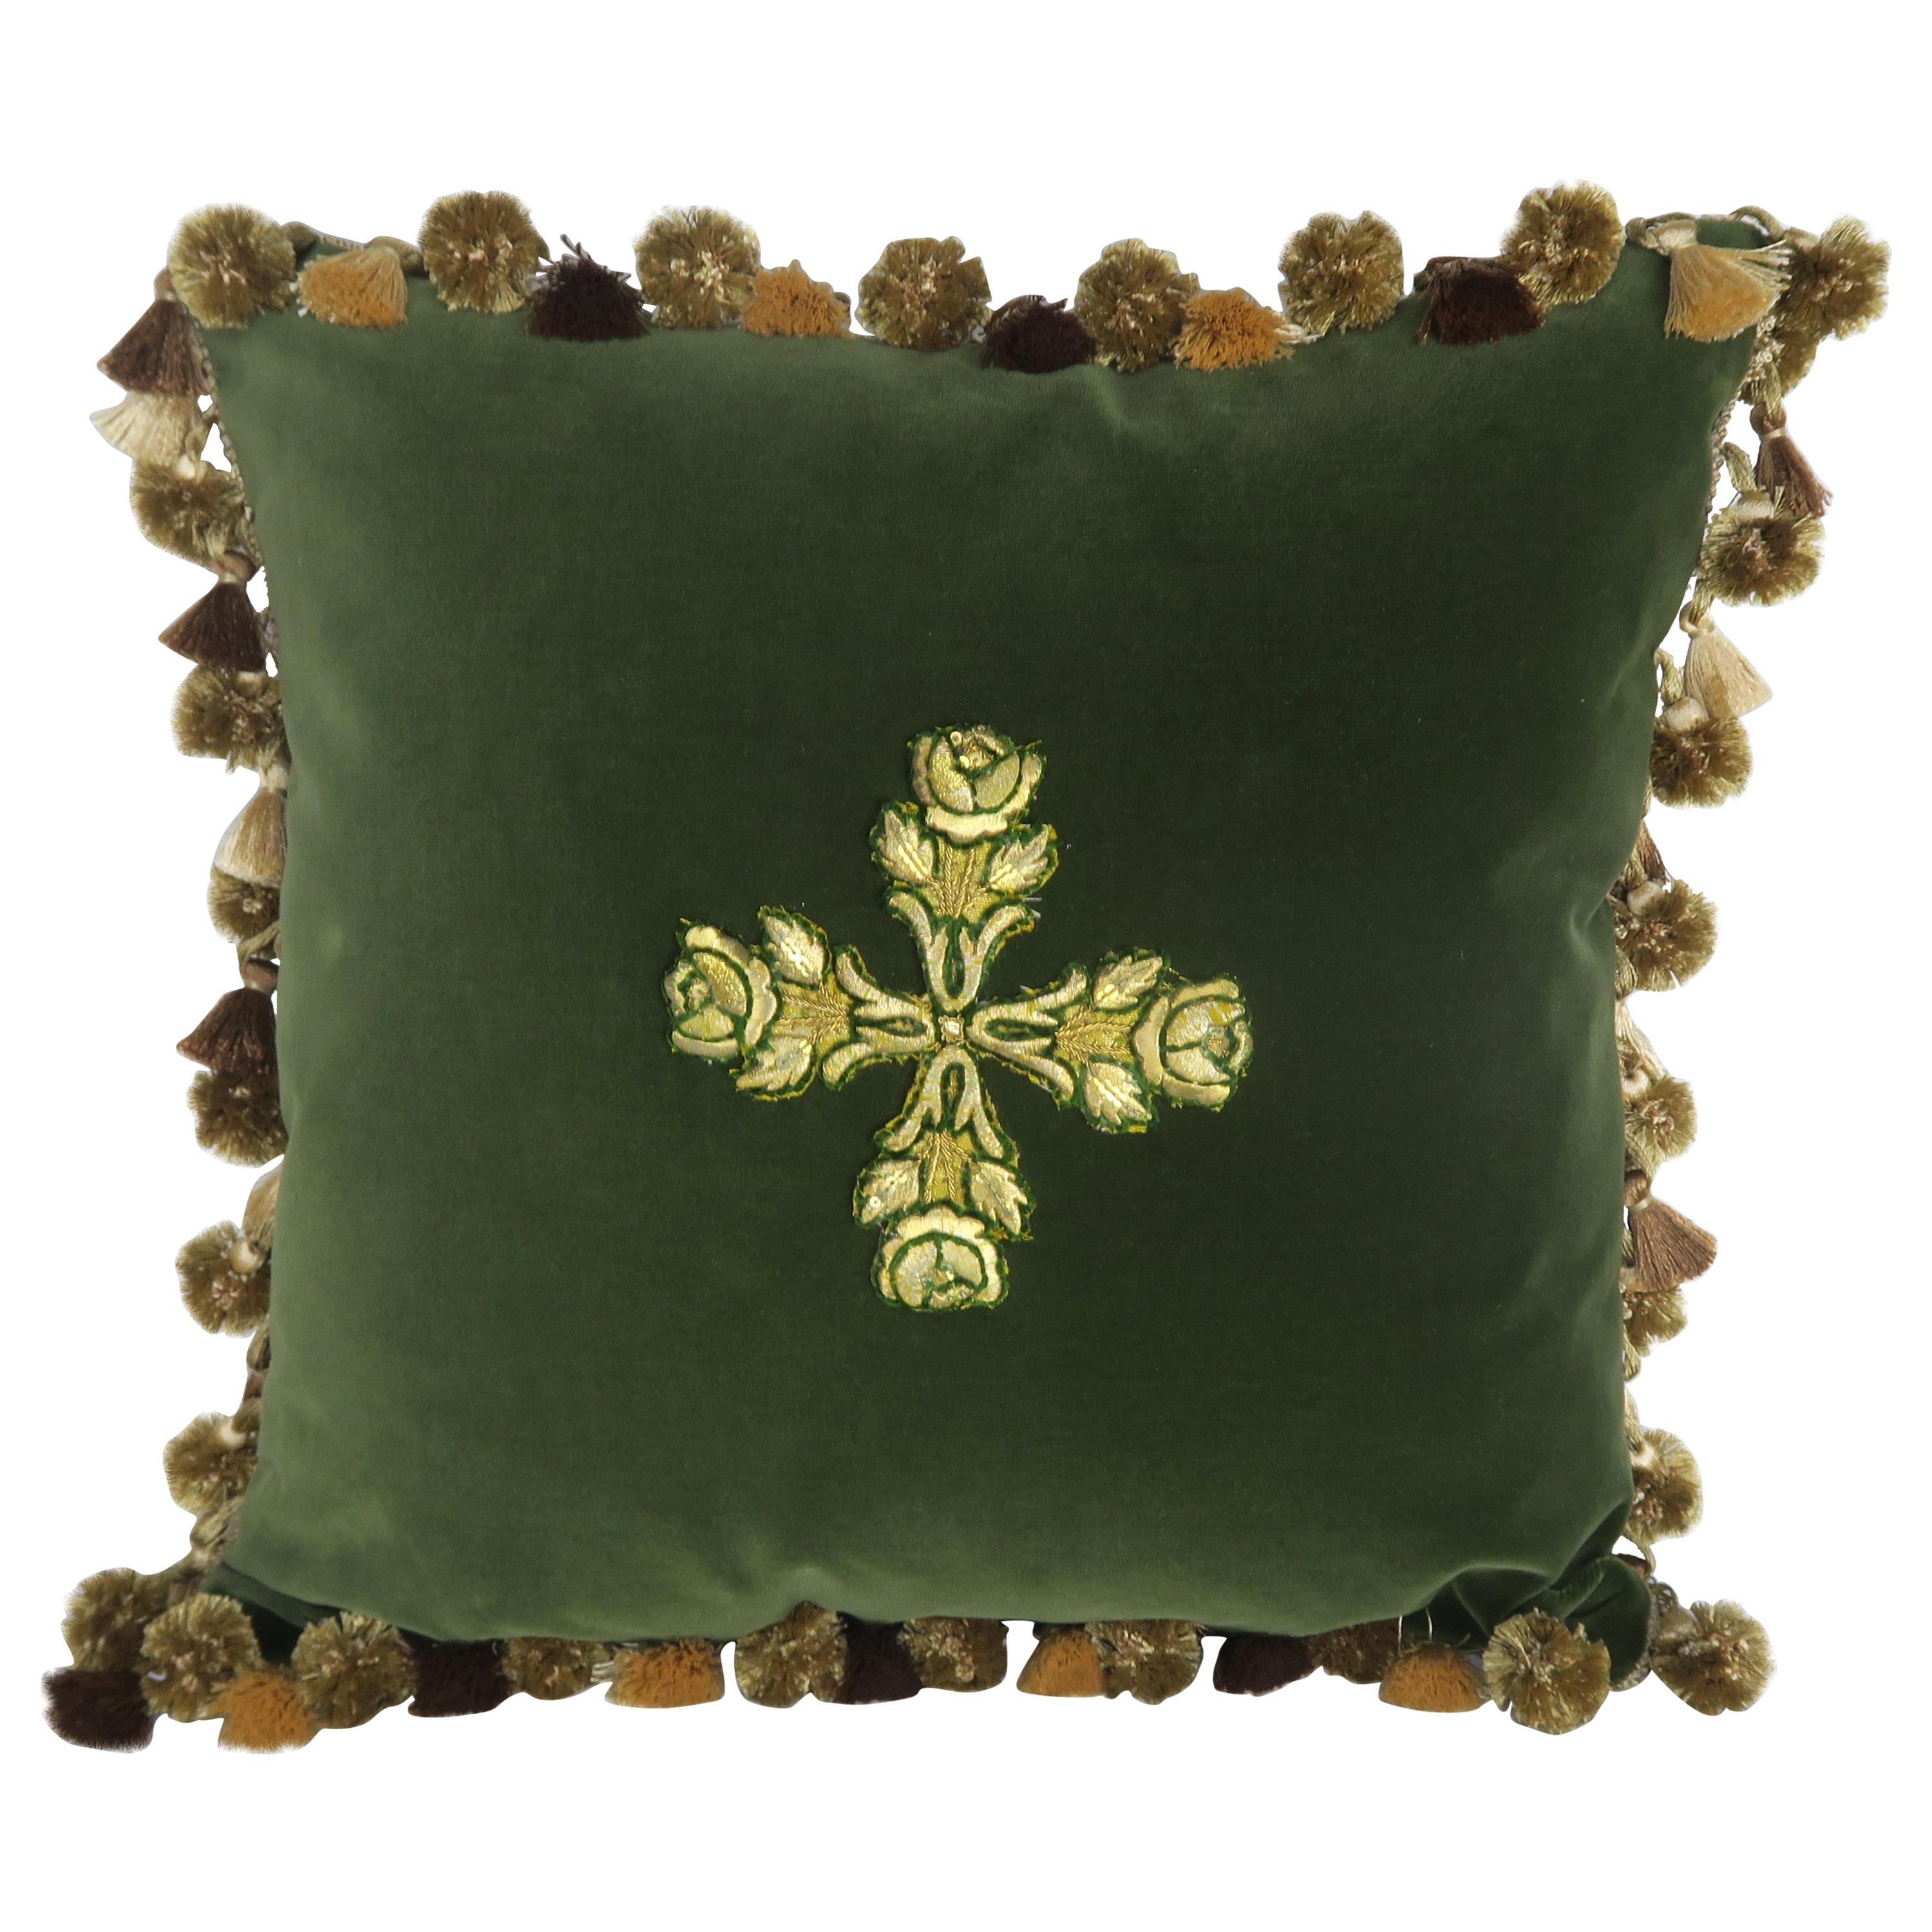 19th Century Appliqued Green Velvet Pillows by Melissa Levinson